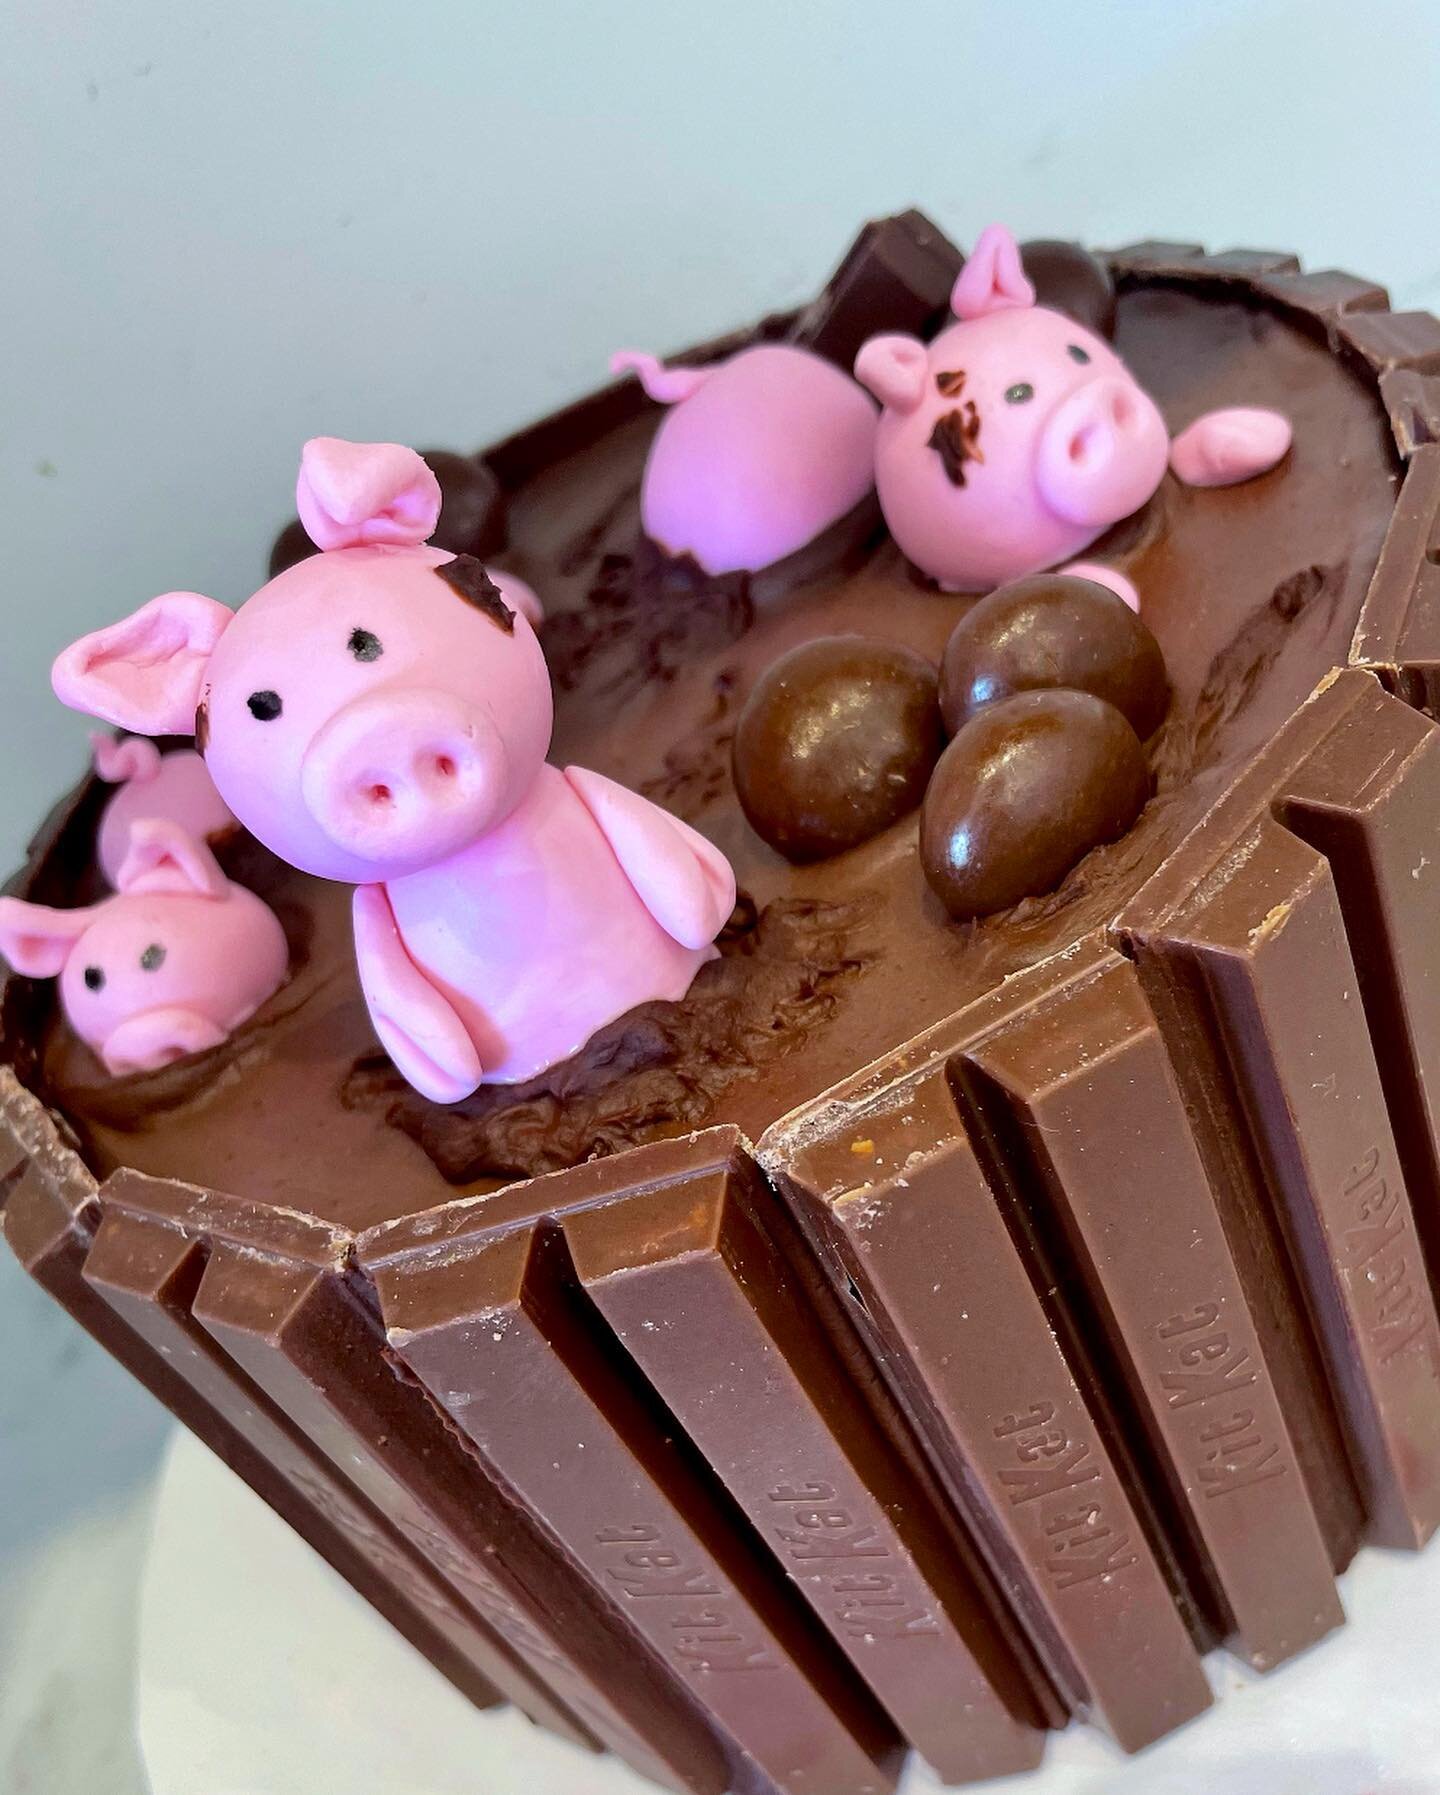 🐽

#sweetandflour #secaucus #nj #njbakery #jersey #customcakes #cakelife #cupcakes #smallbusiness

#bakery #cake #baking #dessert #pastry #foodporn #instafood #chocolate #foodie #cookies #cakedecorating #birthdaycake #foodphotography #cupcakes #cake